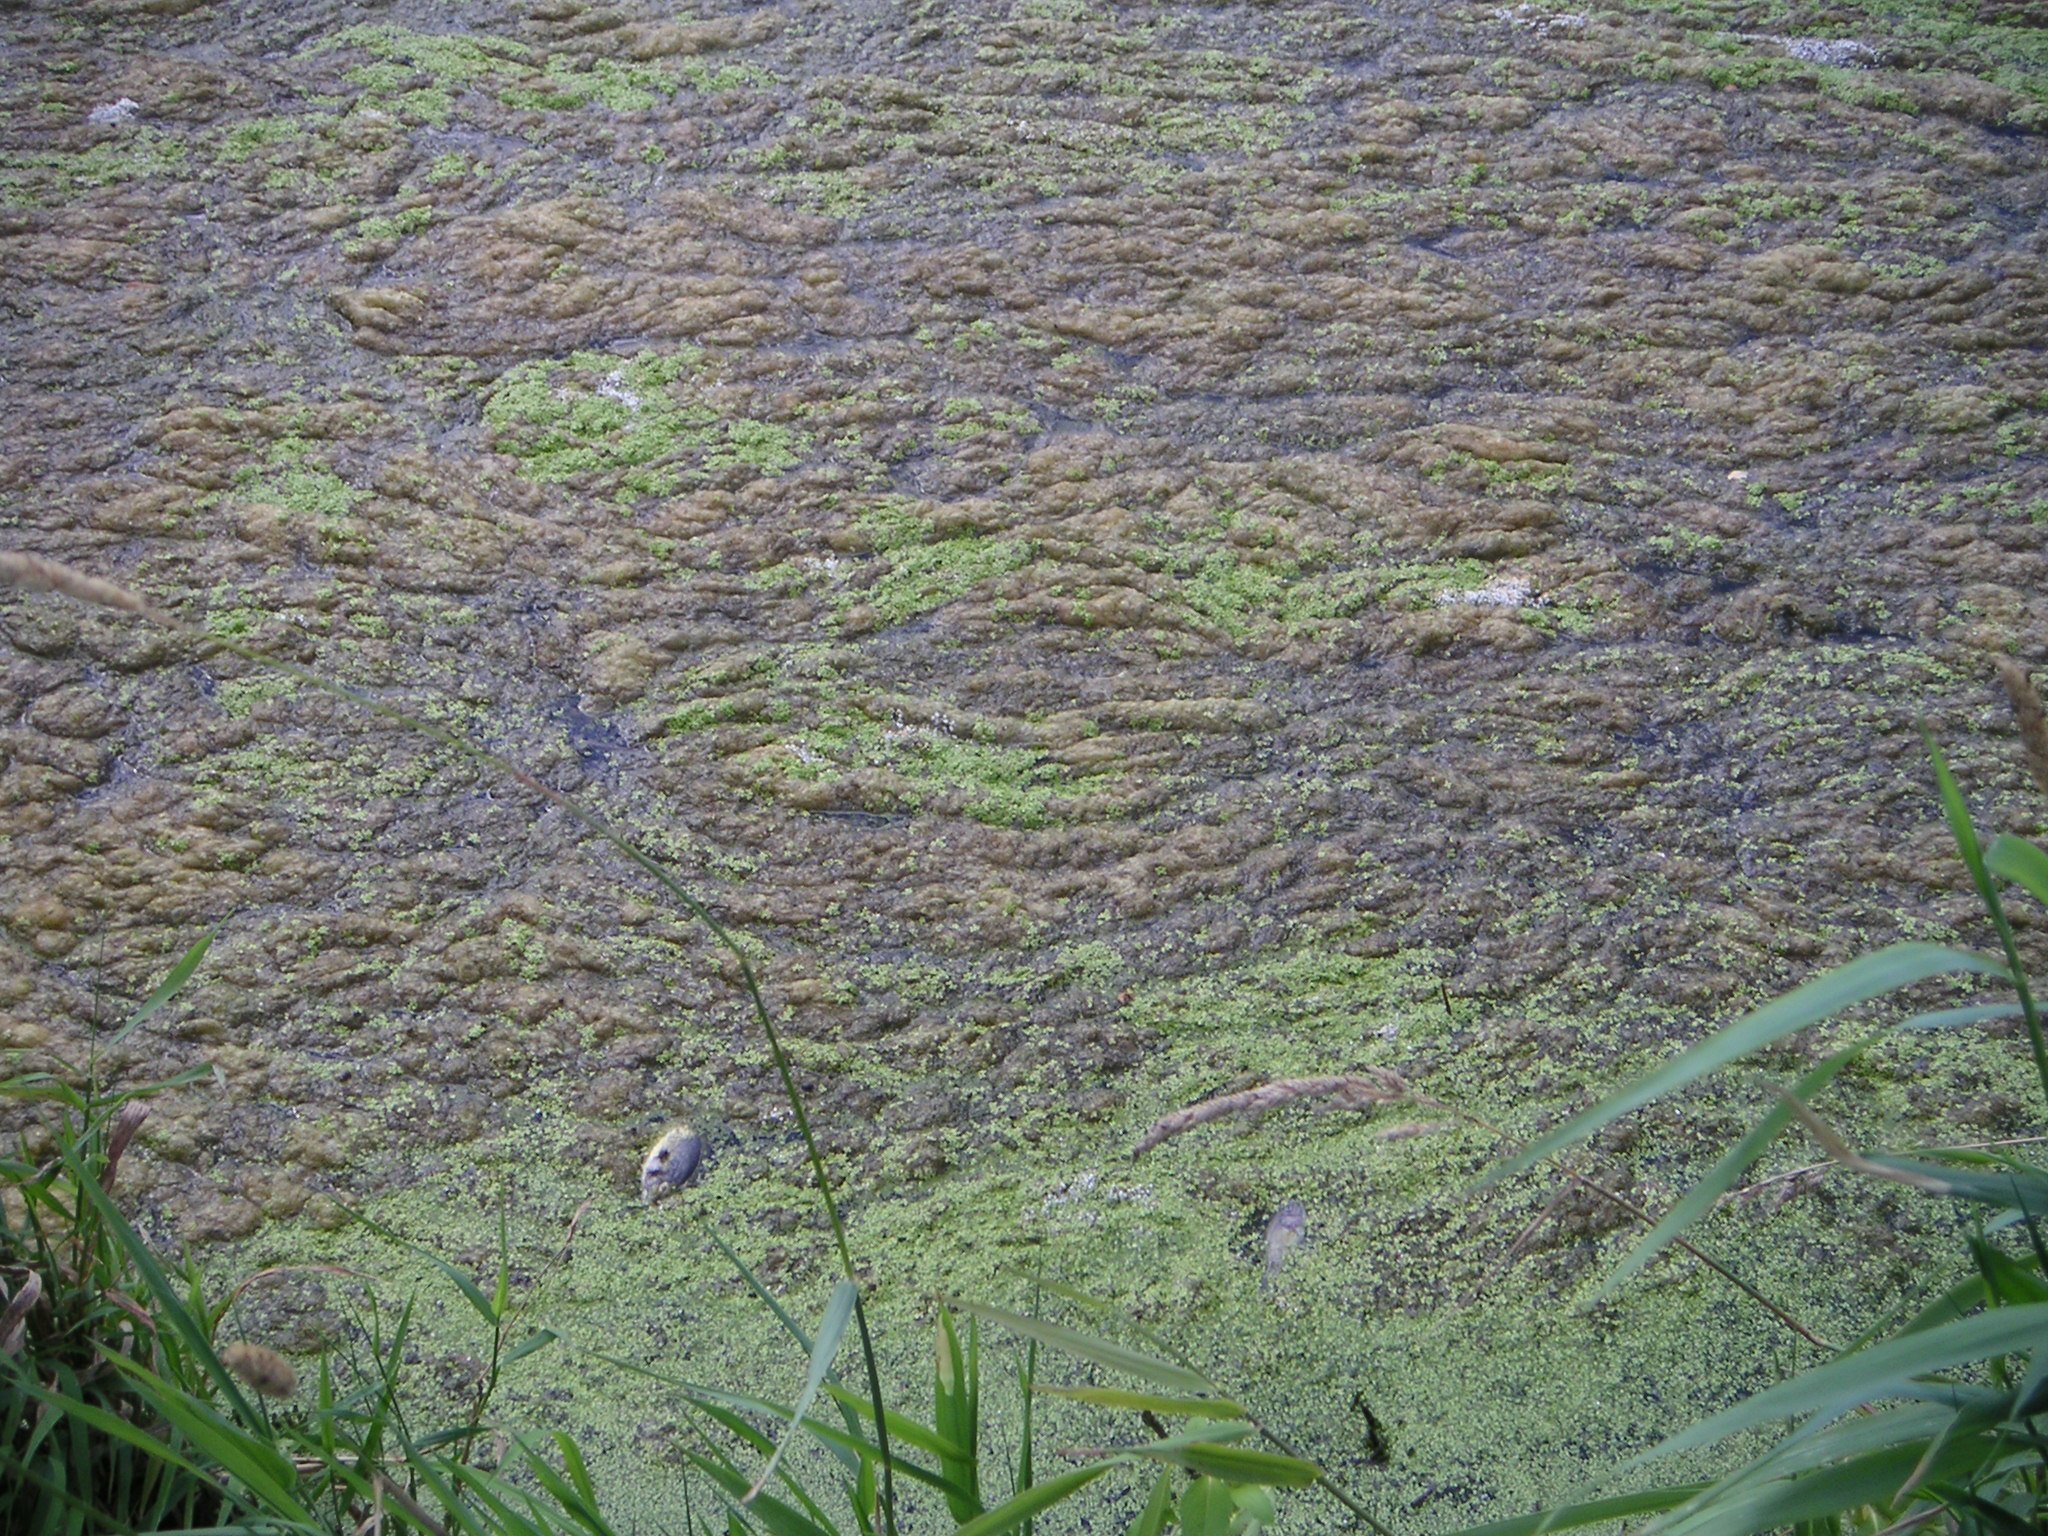 duckweed-and-watermeal-close-up.jpg